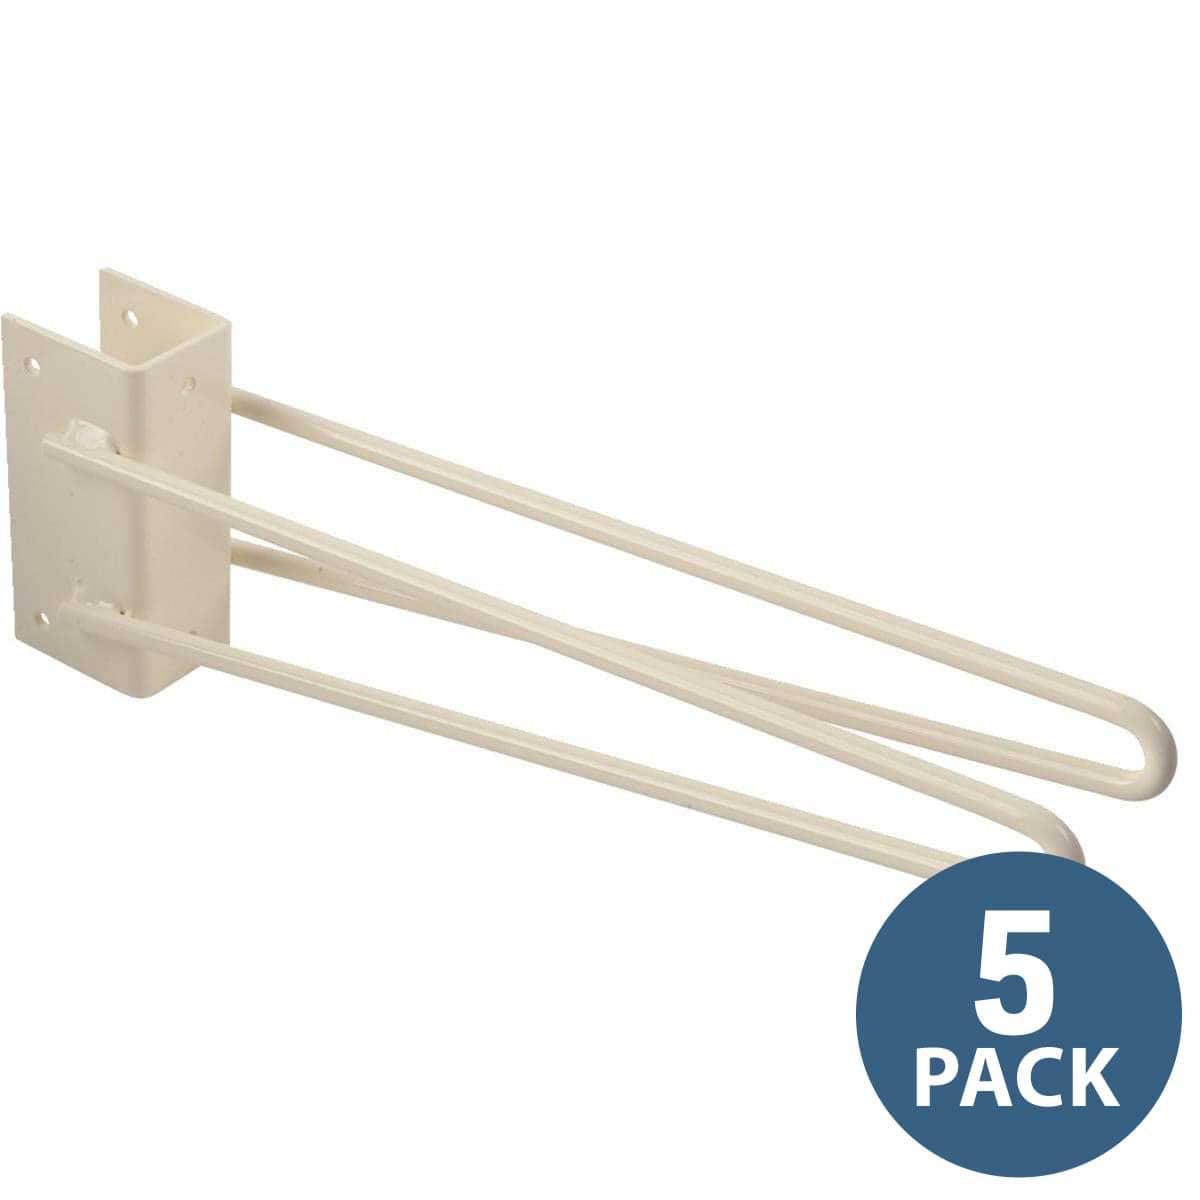 Gemplers Stud-Mount Double Rod Tool Rack | 5 Pack